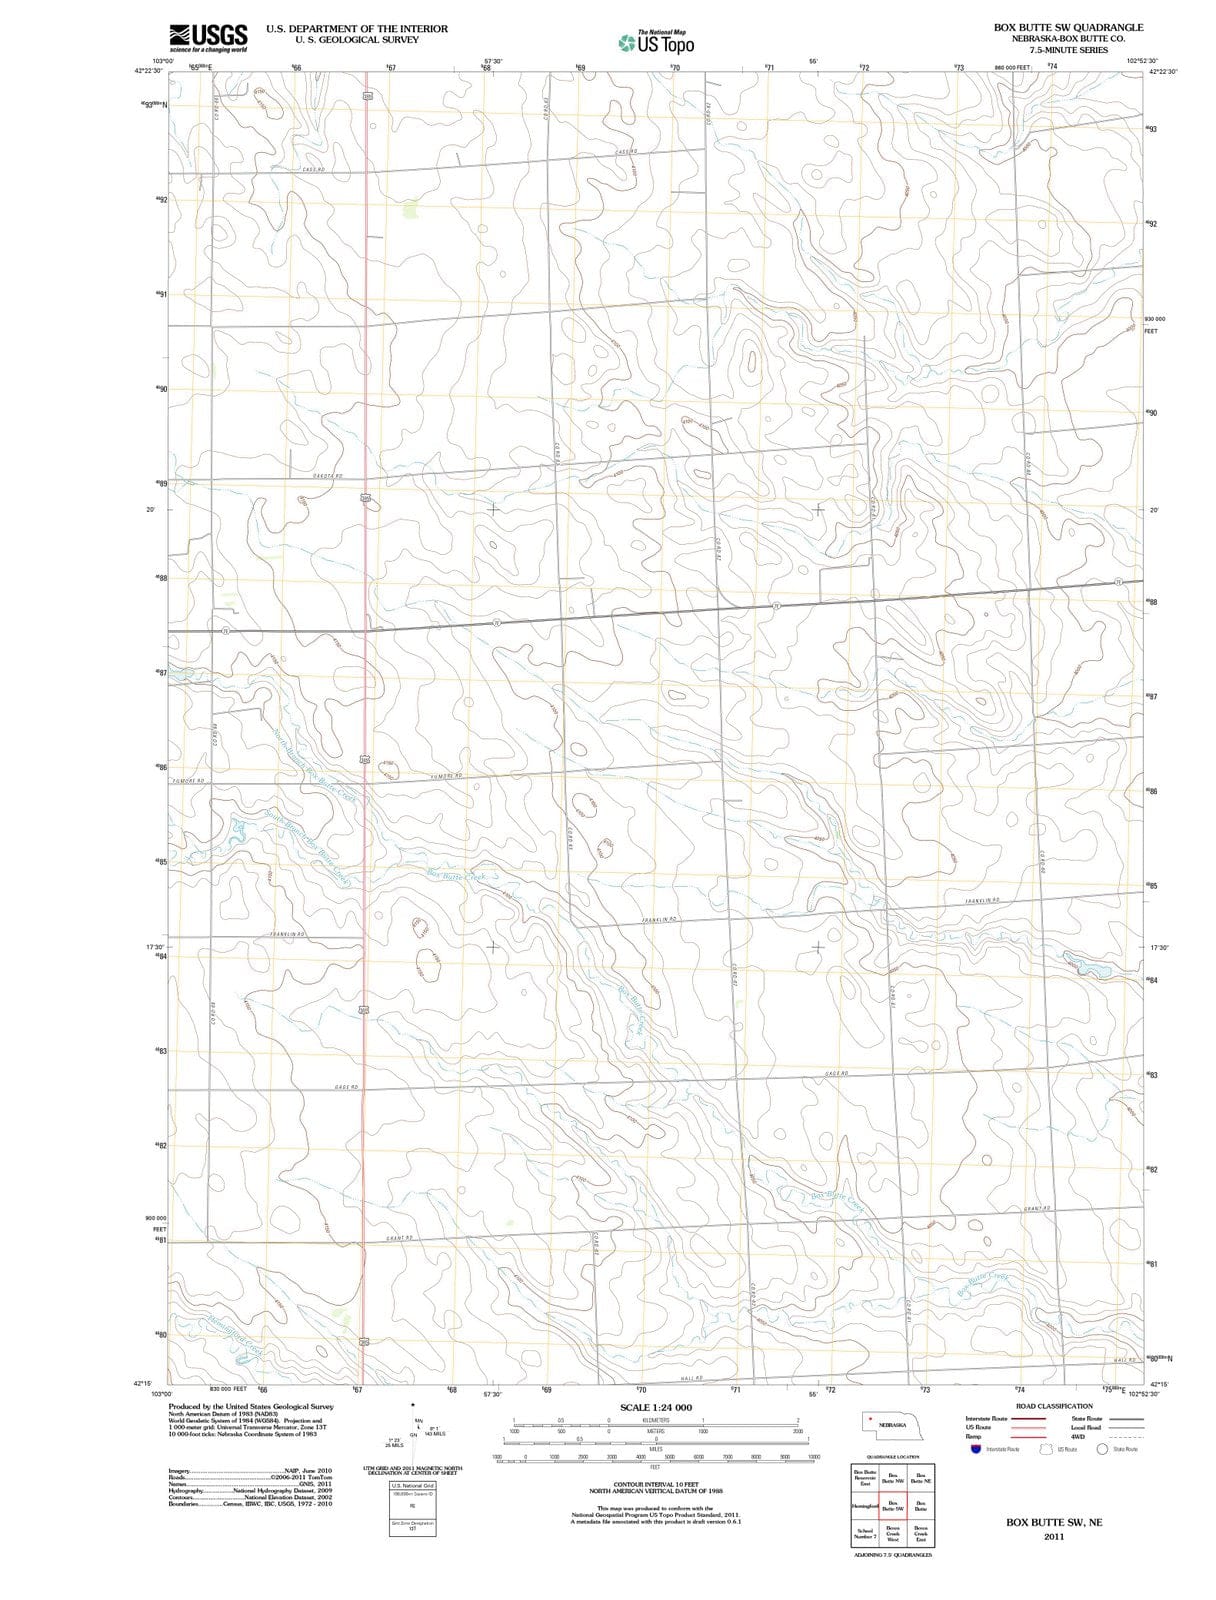 2011 Box Butte, NE - Nebraska - USGS Topographic Map v4